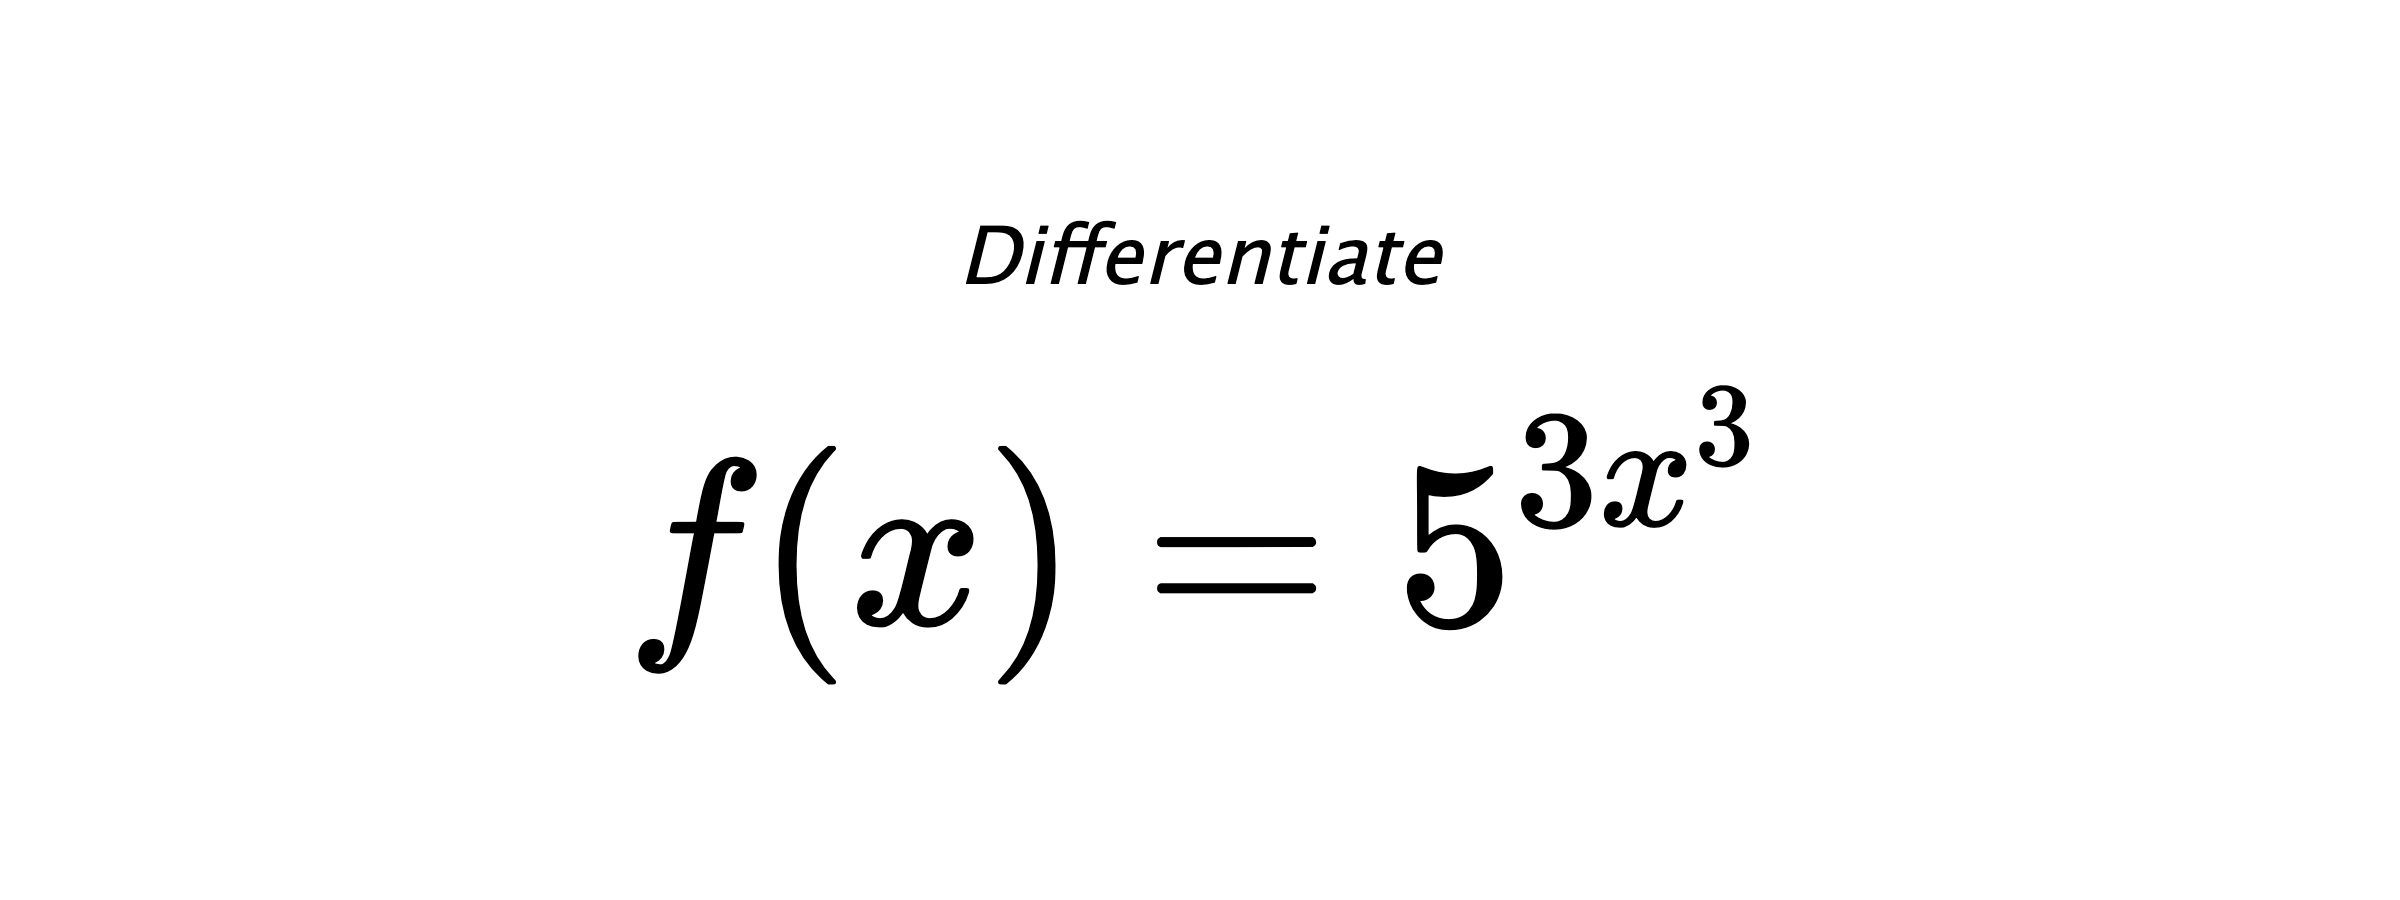 Differentiate $ f(x) = 5^{3 x^{3}} $